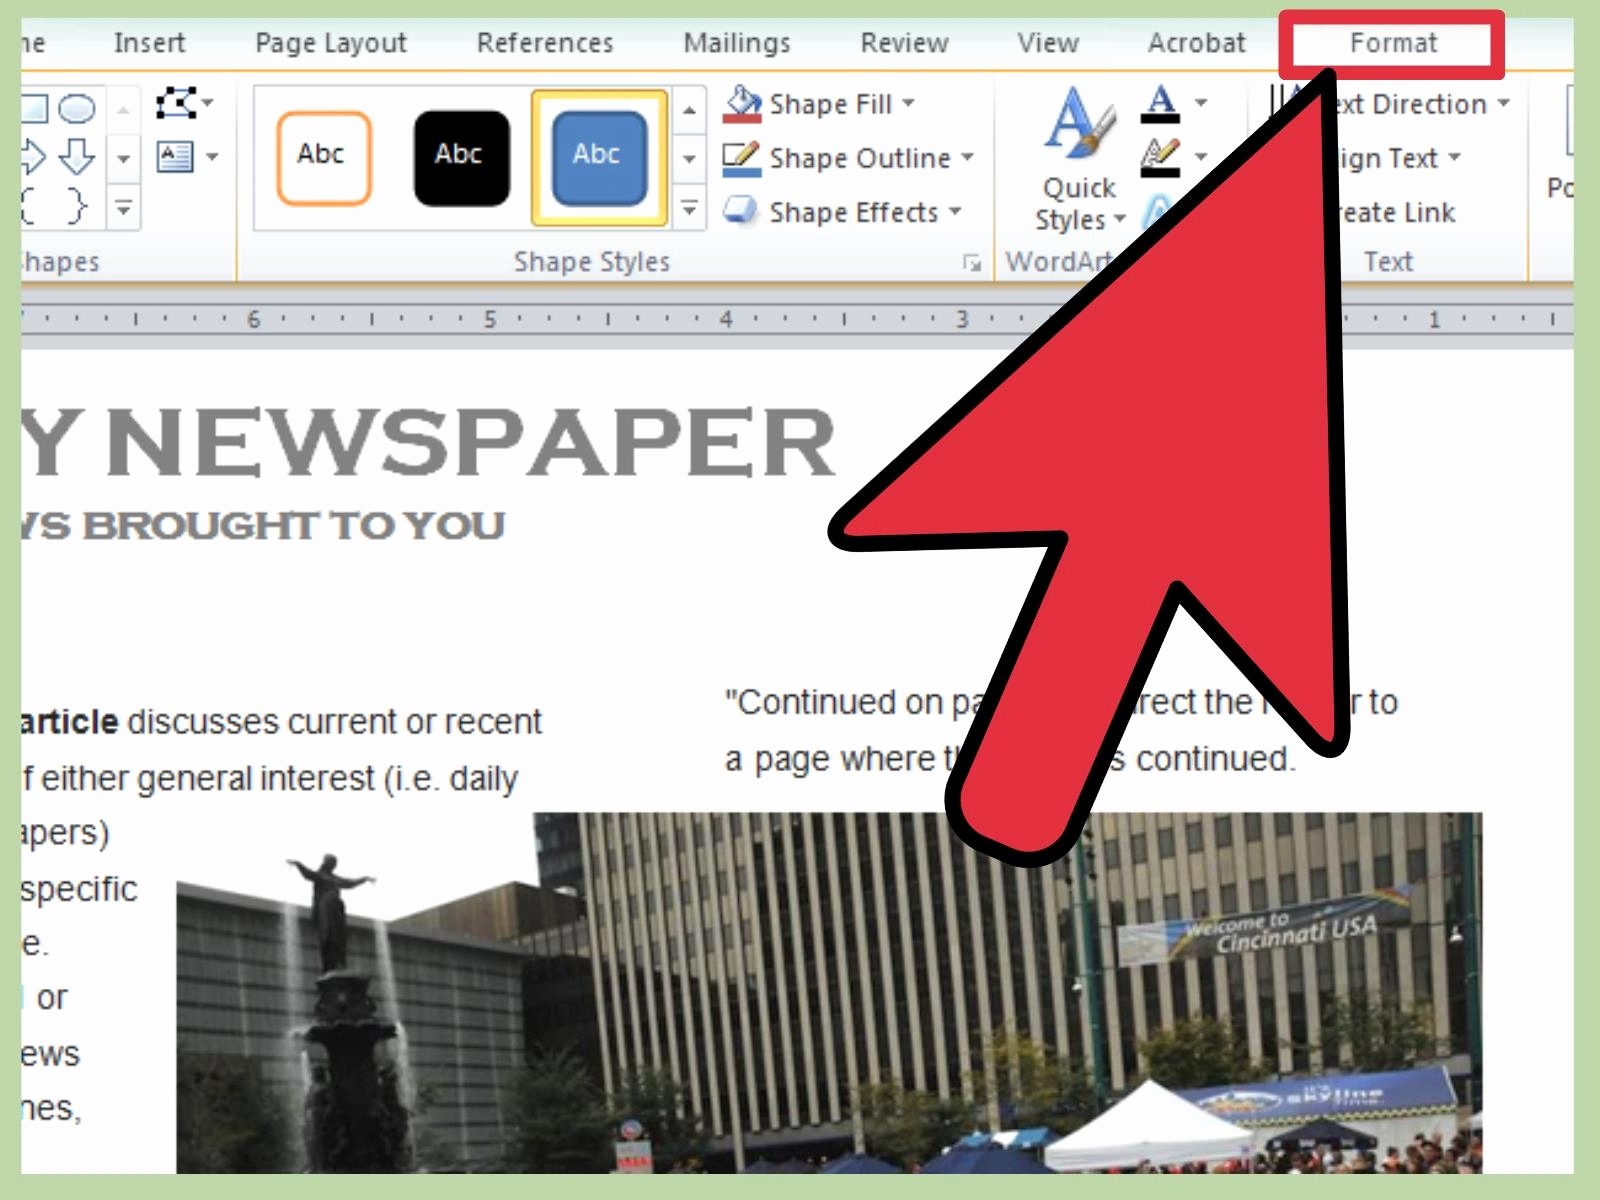 Microsoft Word Newspaper Article Template Inspirational How to Make A Newspaper Article Template Microsoft Word